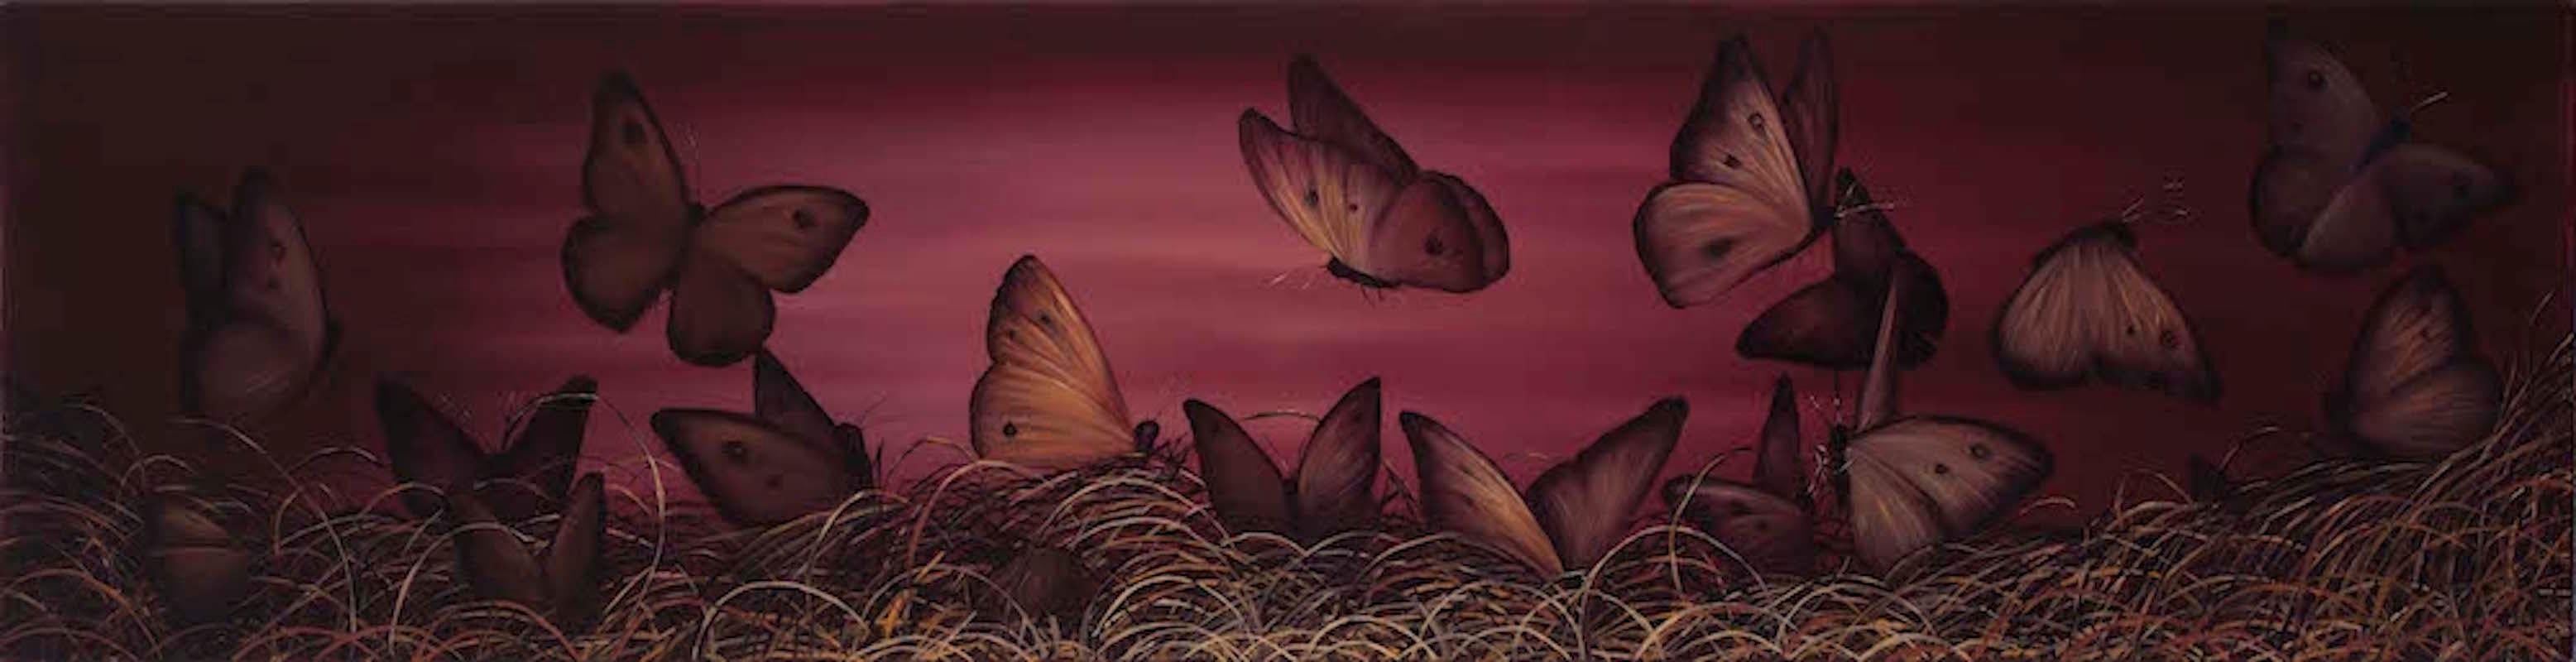 Allison Green Landscape Painting - Life Force, butterflies, magenta